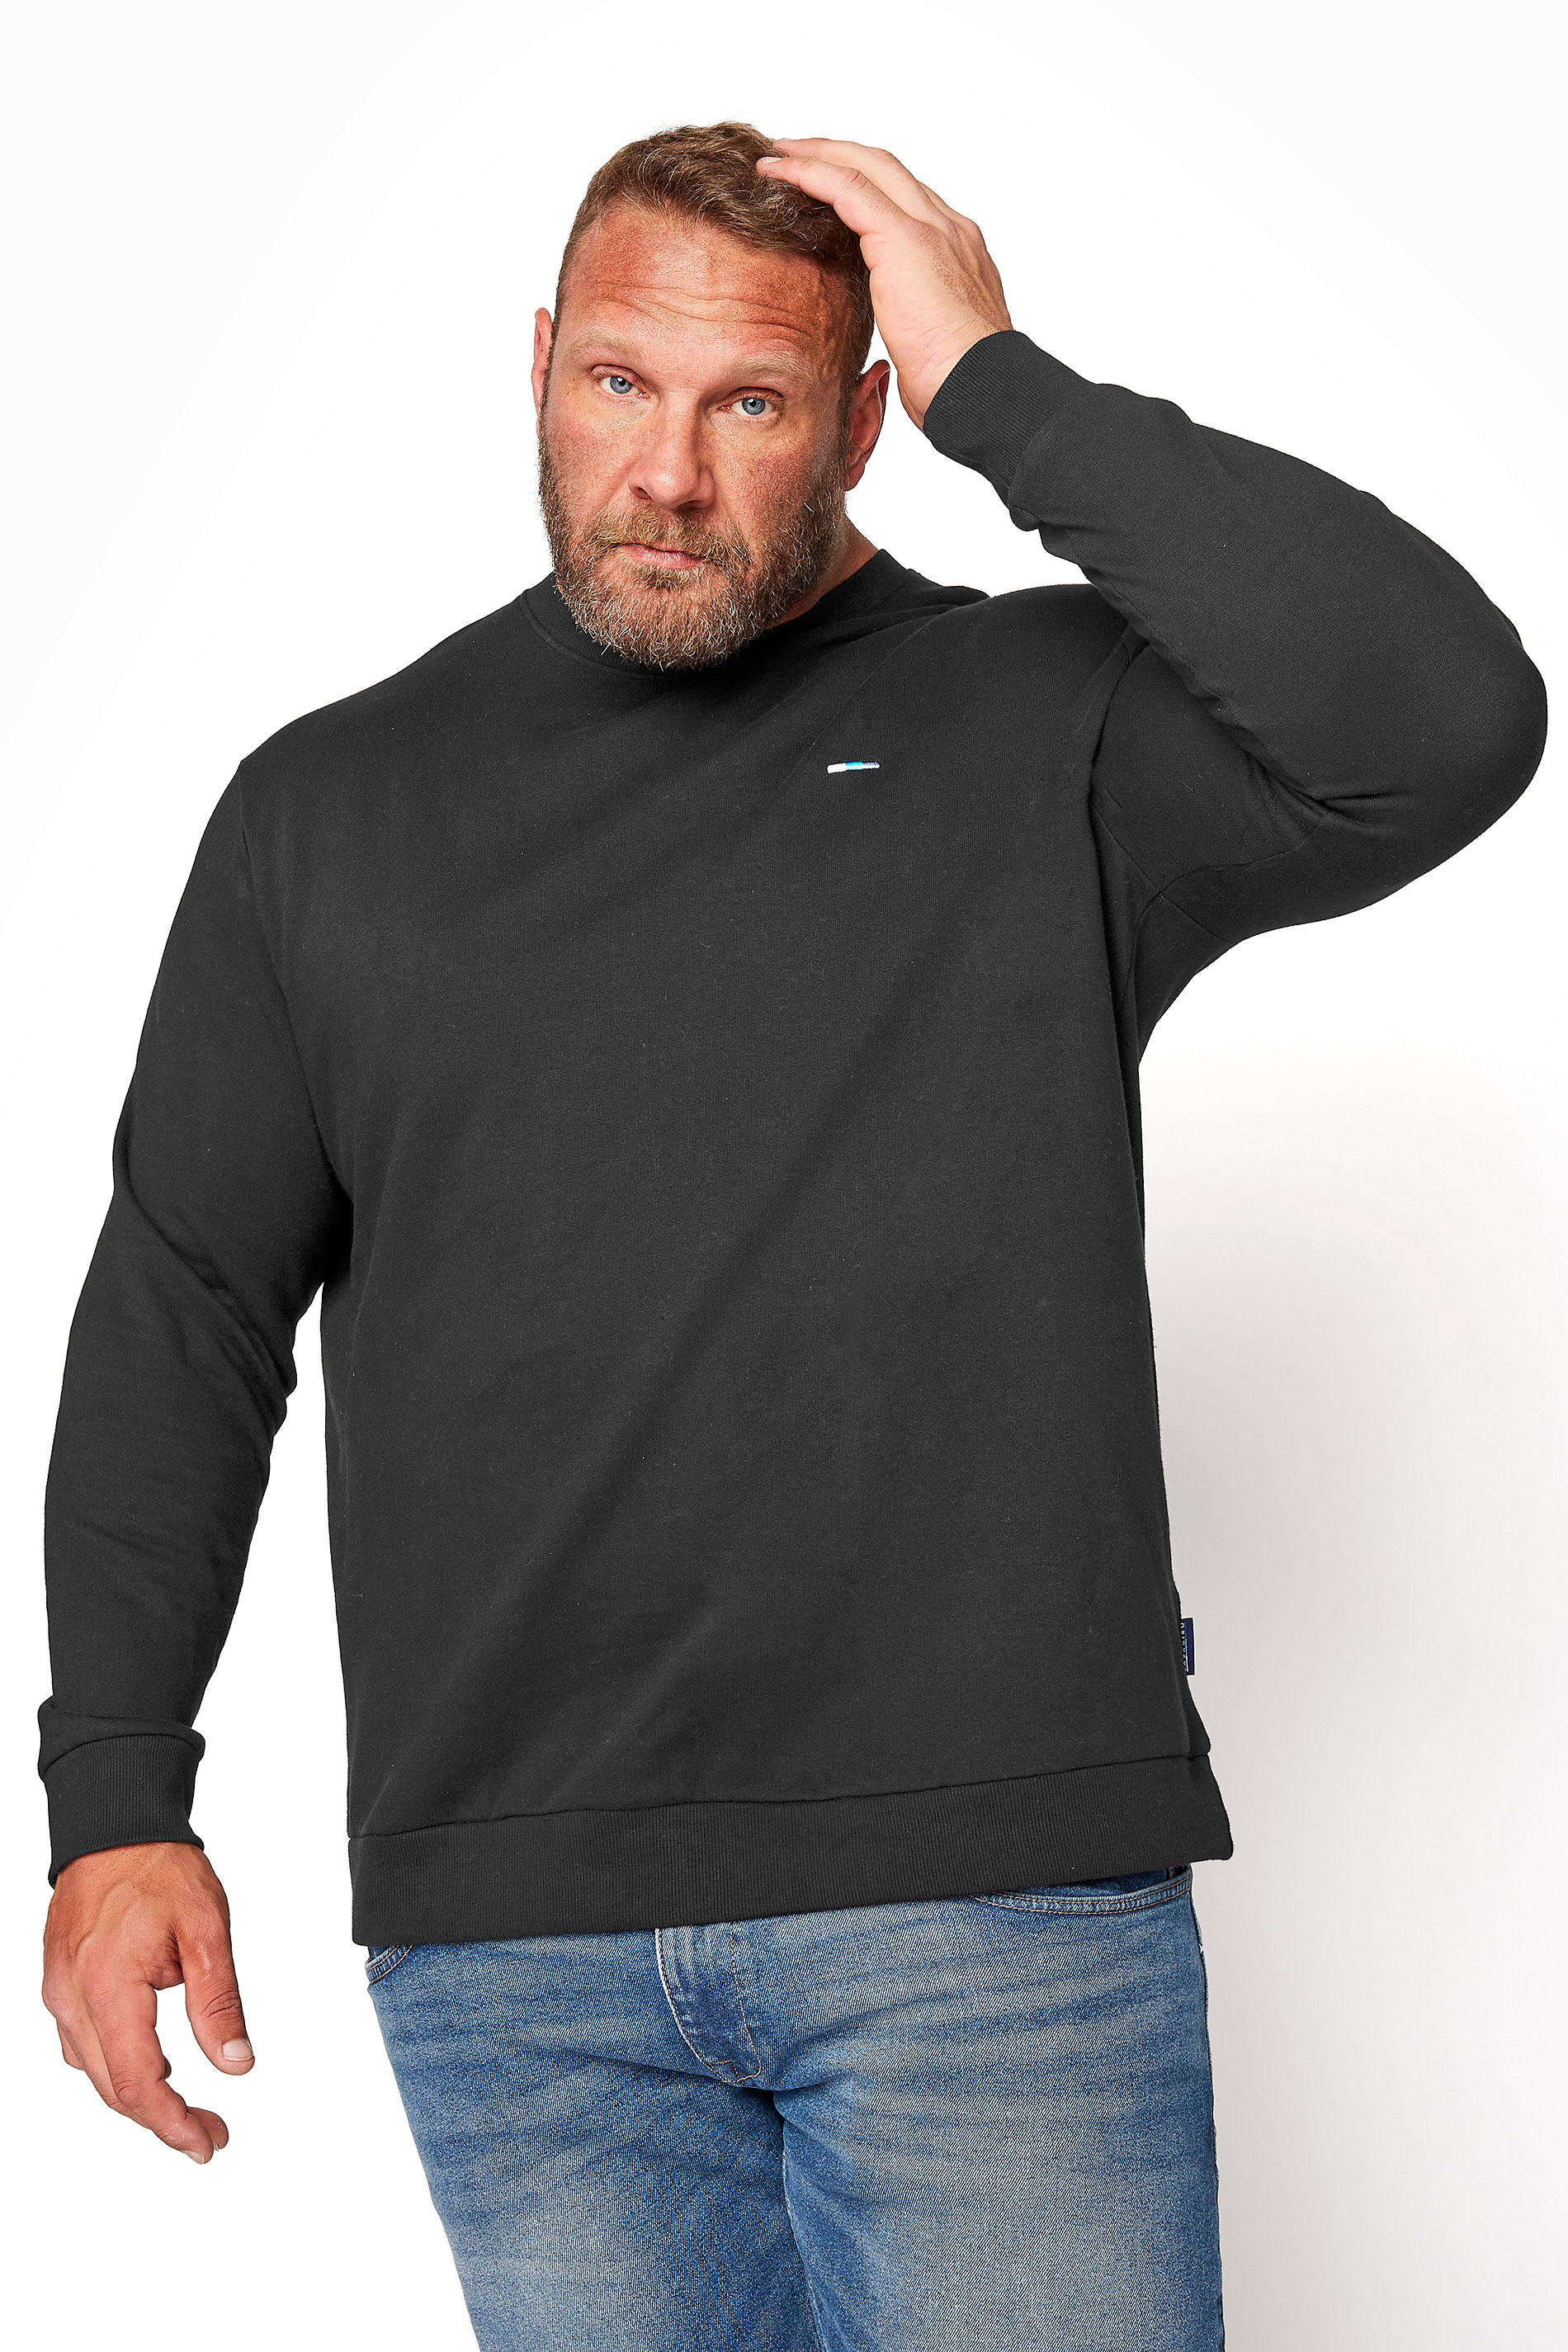 BadRhino Black Essential Sweatshirt_M.jpg